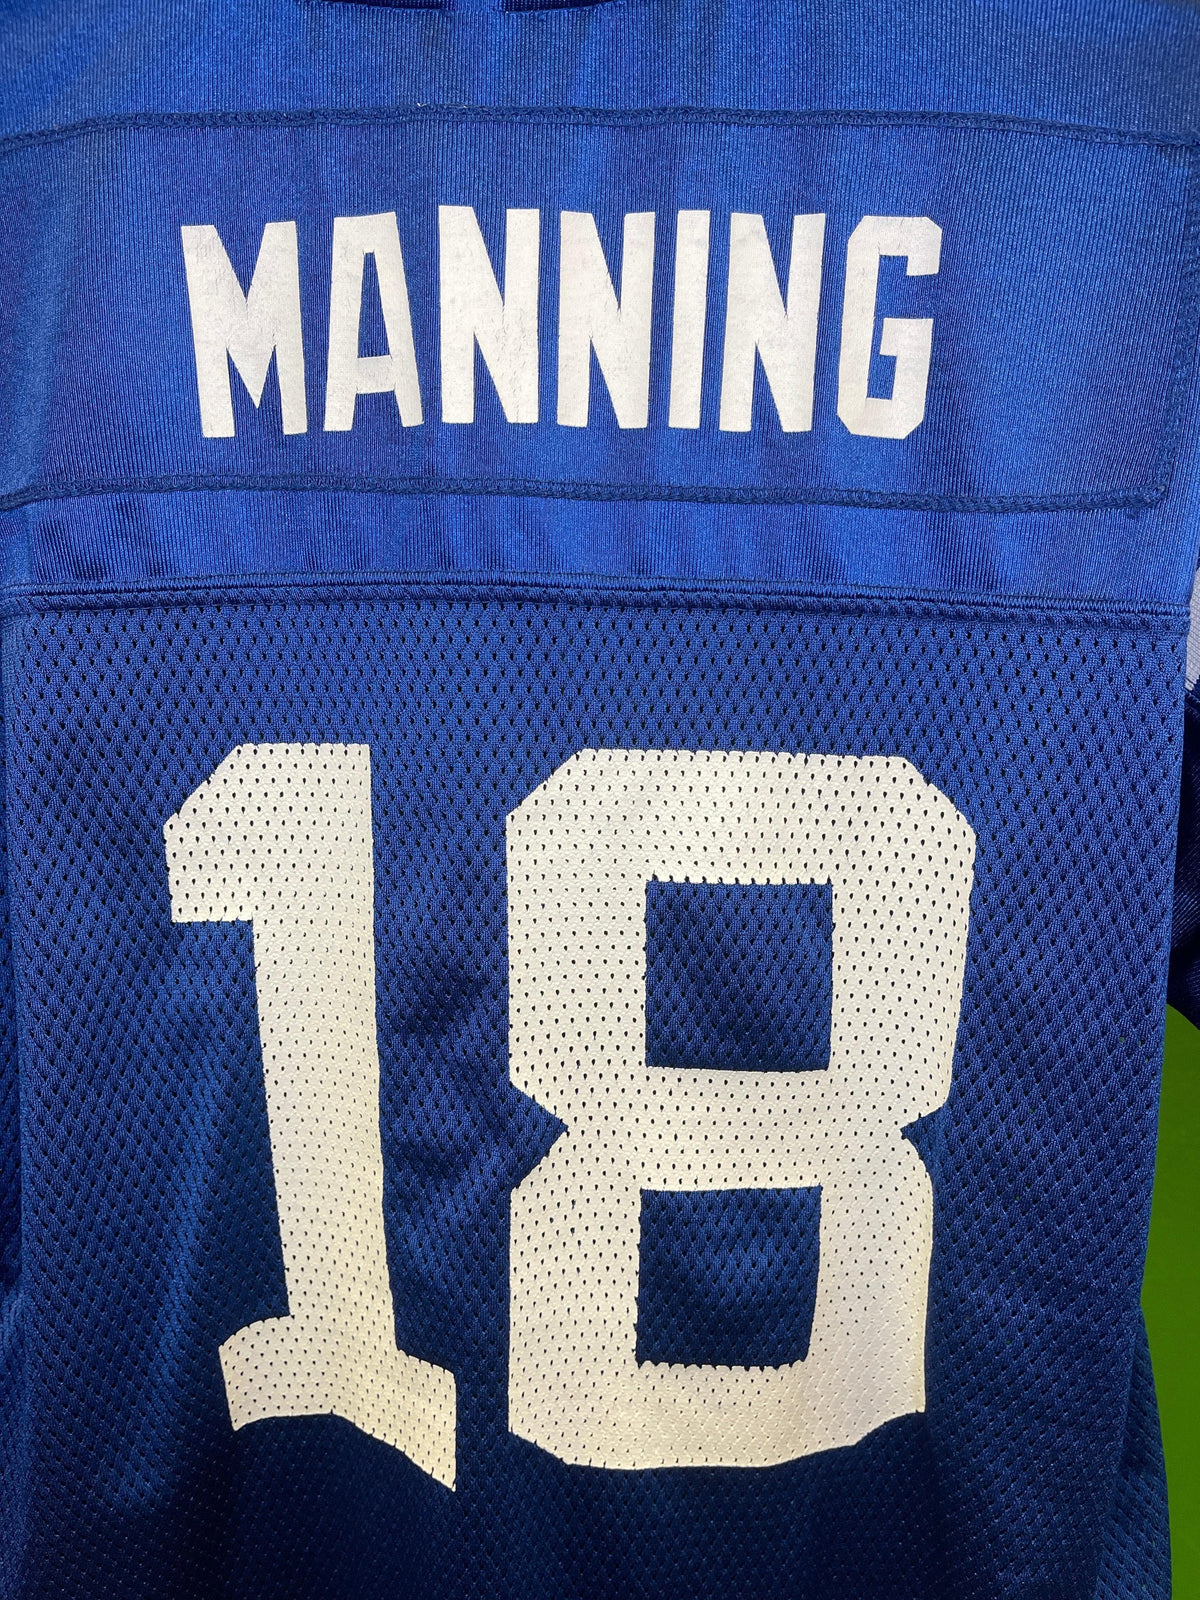 NFL Indianapolis Colts Peyton Manning #18 Reebok Jersey Youth X-Large